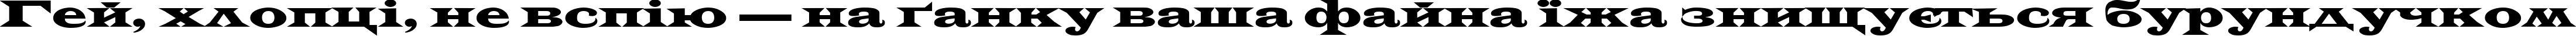 Пример написания шрифтом AZLatinWideCTT текста на украинском